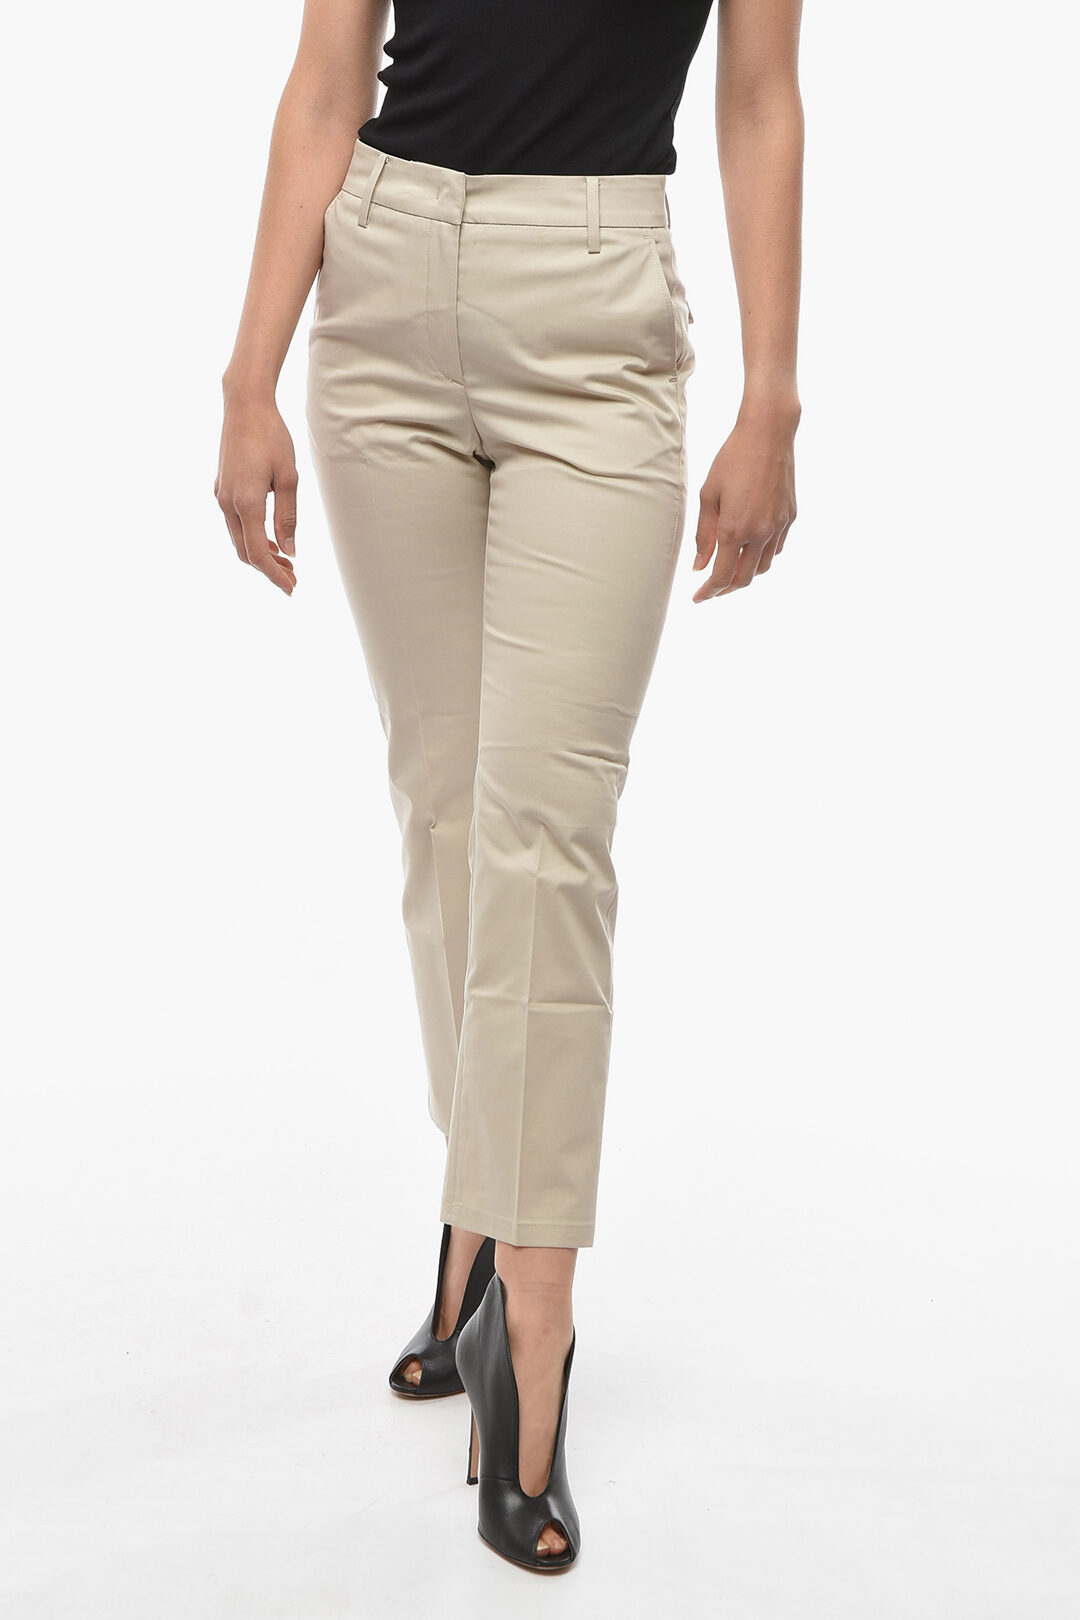 Lauren Ralph Lauren Double-Faced Stretch Cotton Trouser in Tan